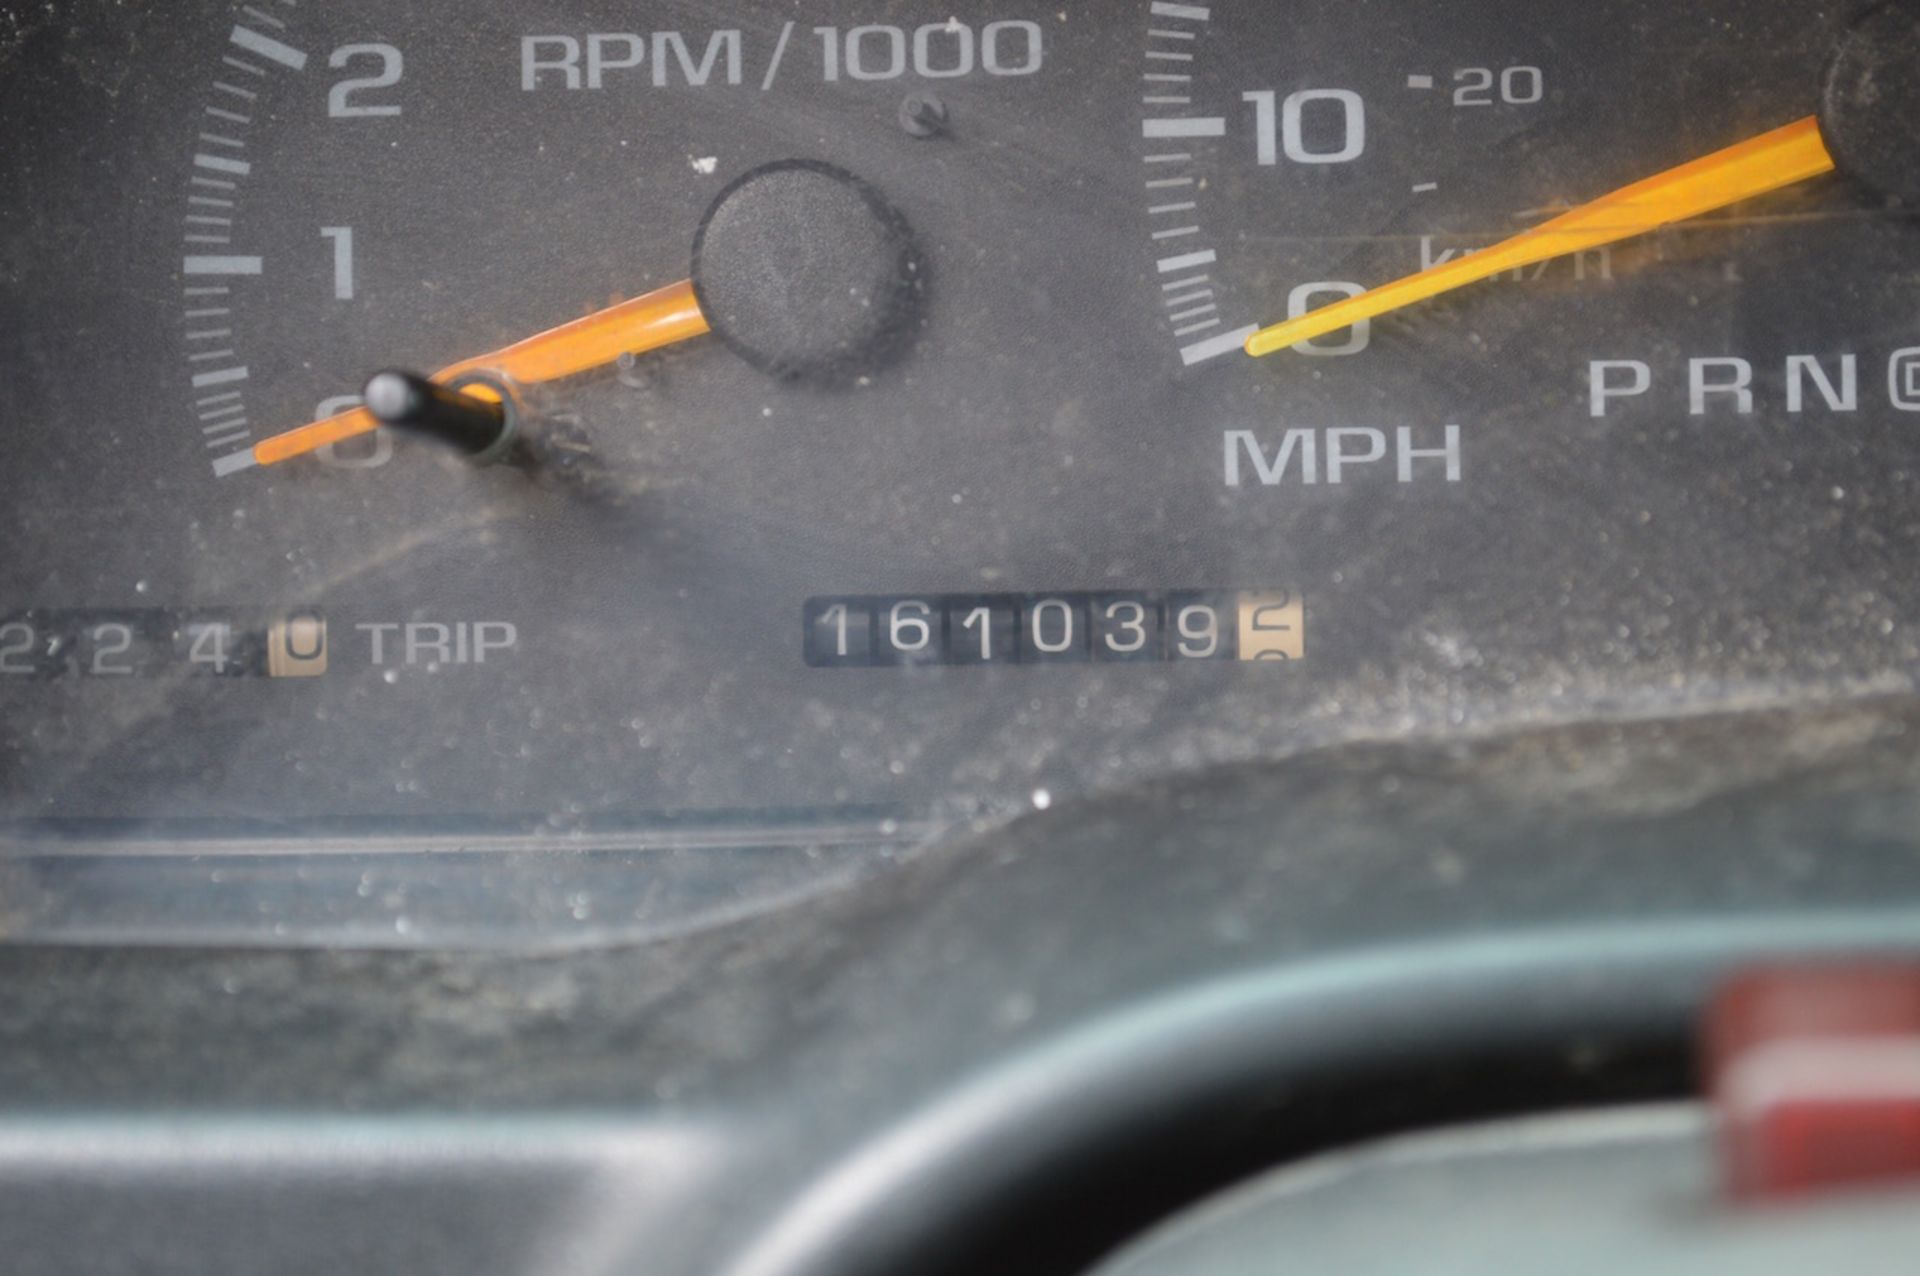 1997 CHEVROLET TAHOE SUV: VIN NO. 1GNEK13ROVJ384998; 161,039 Miles; Automatic Transmission - Image 5 of 5